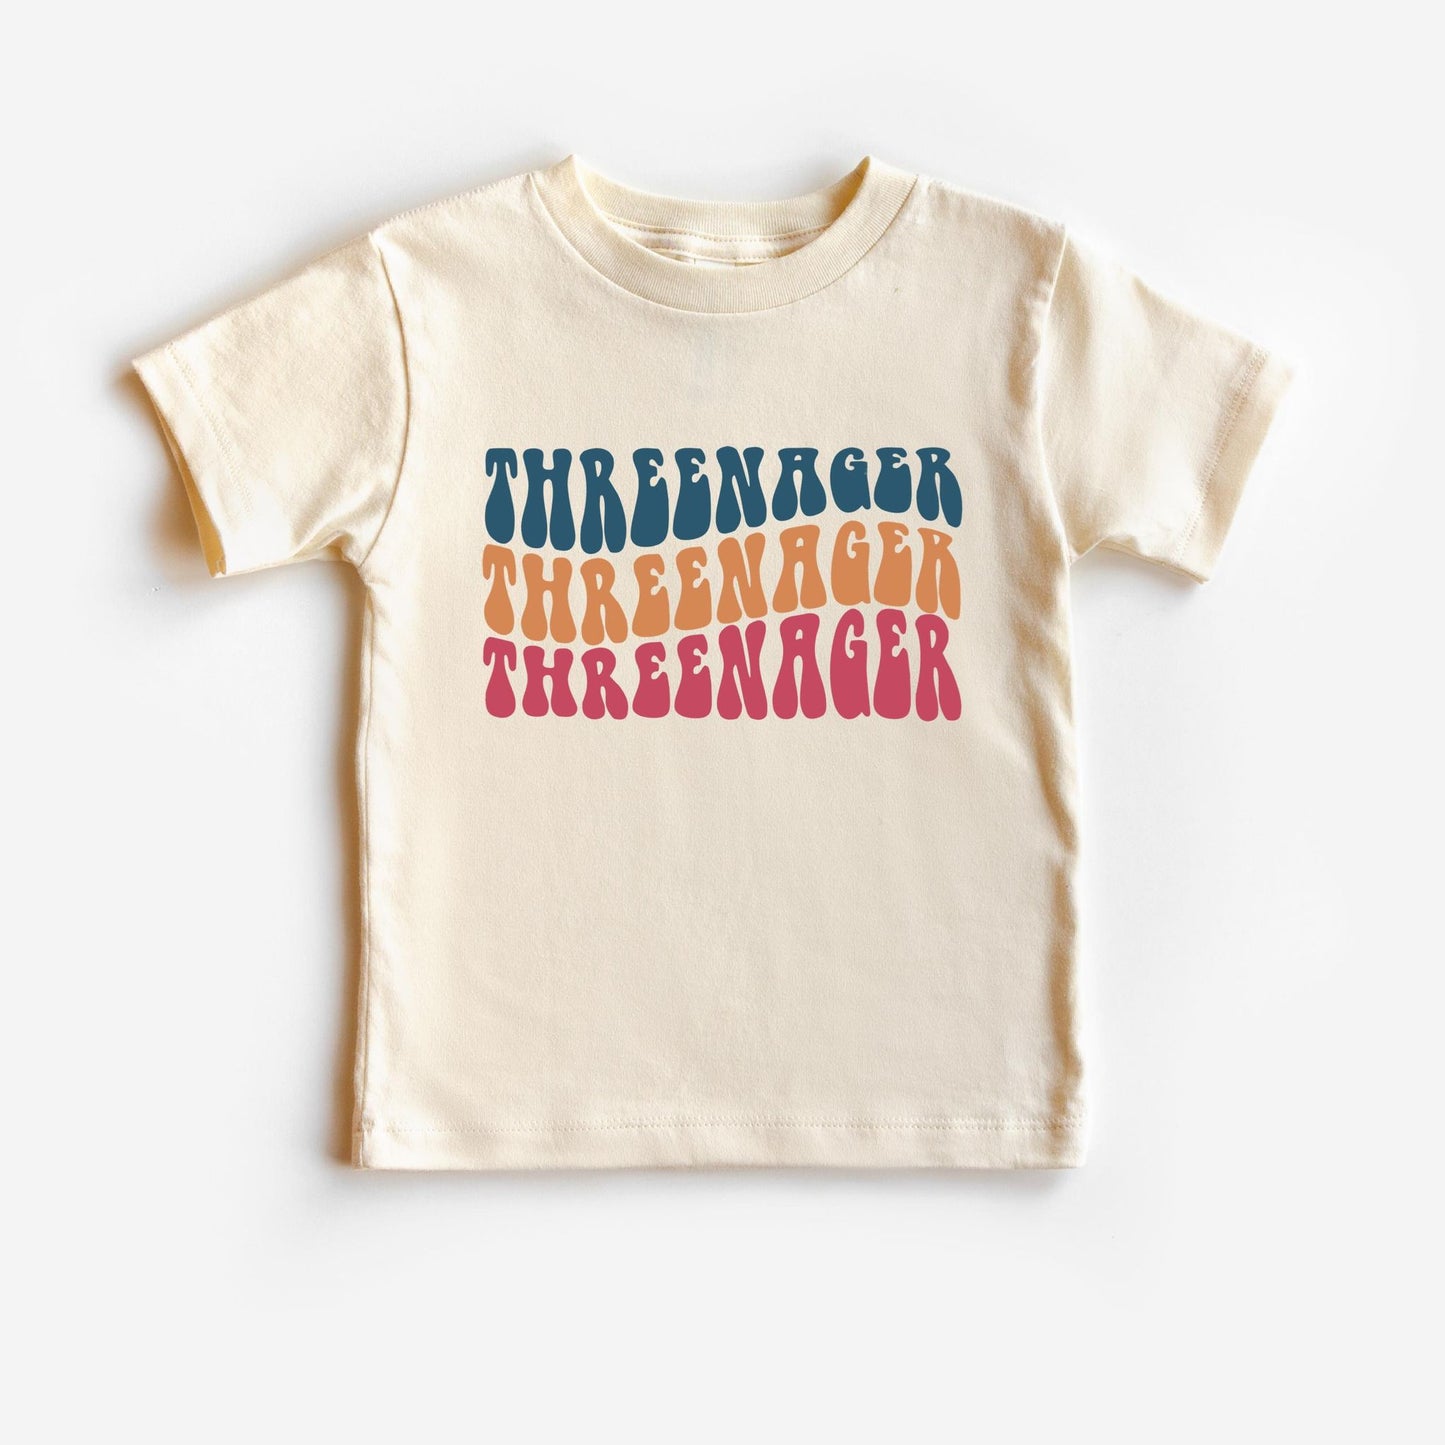 Threenager Toddler T-shirt